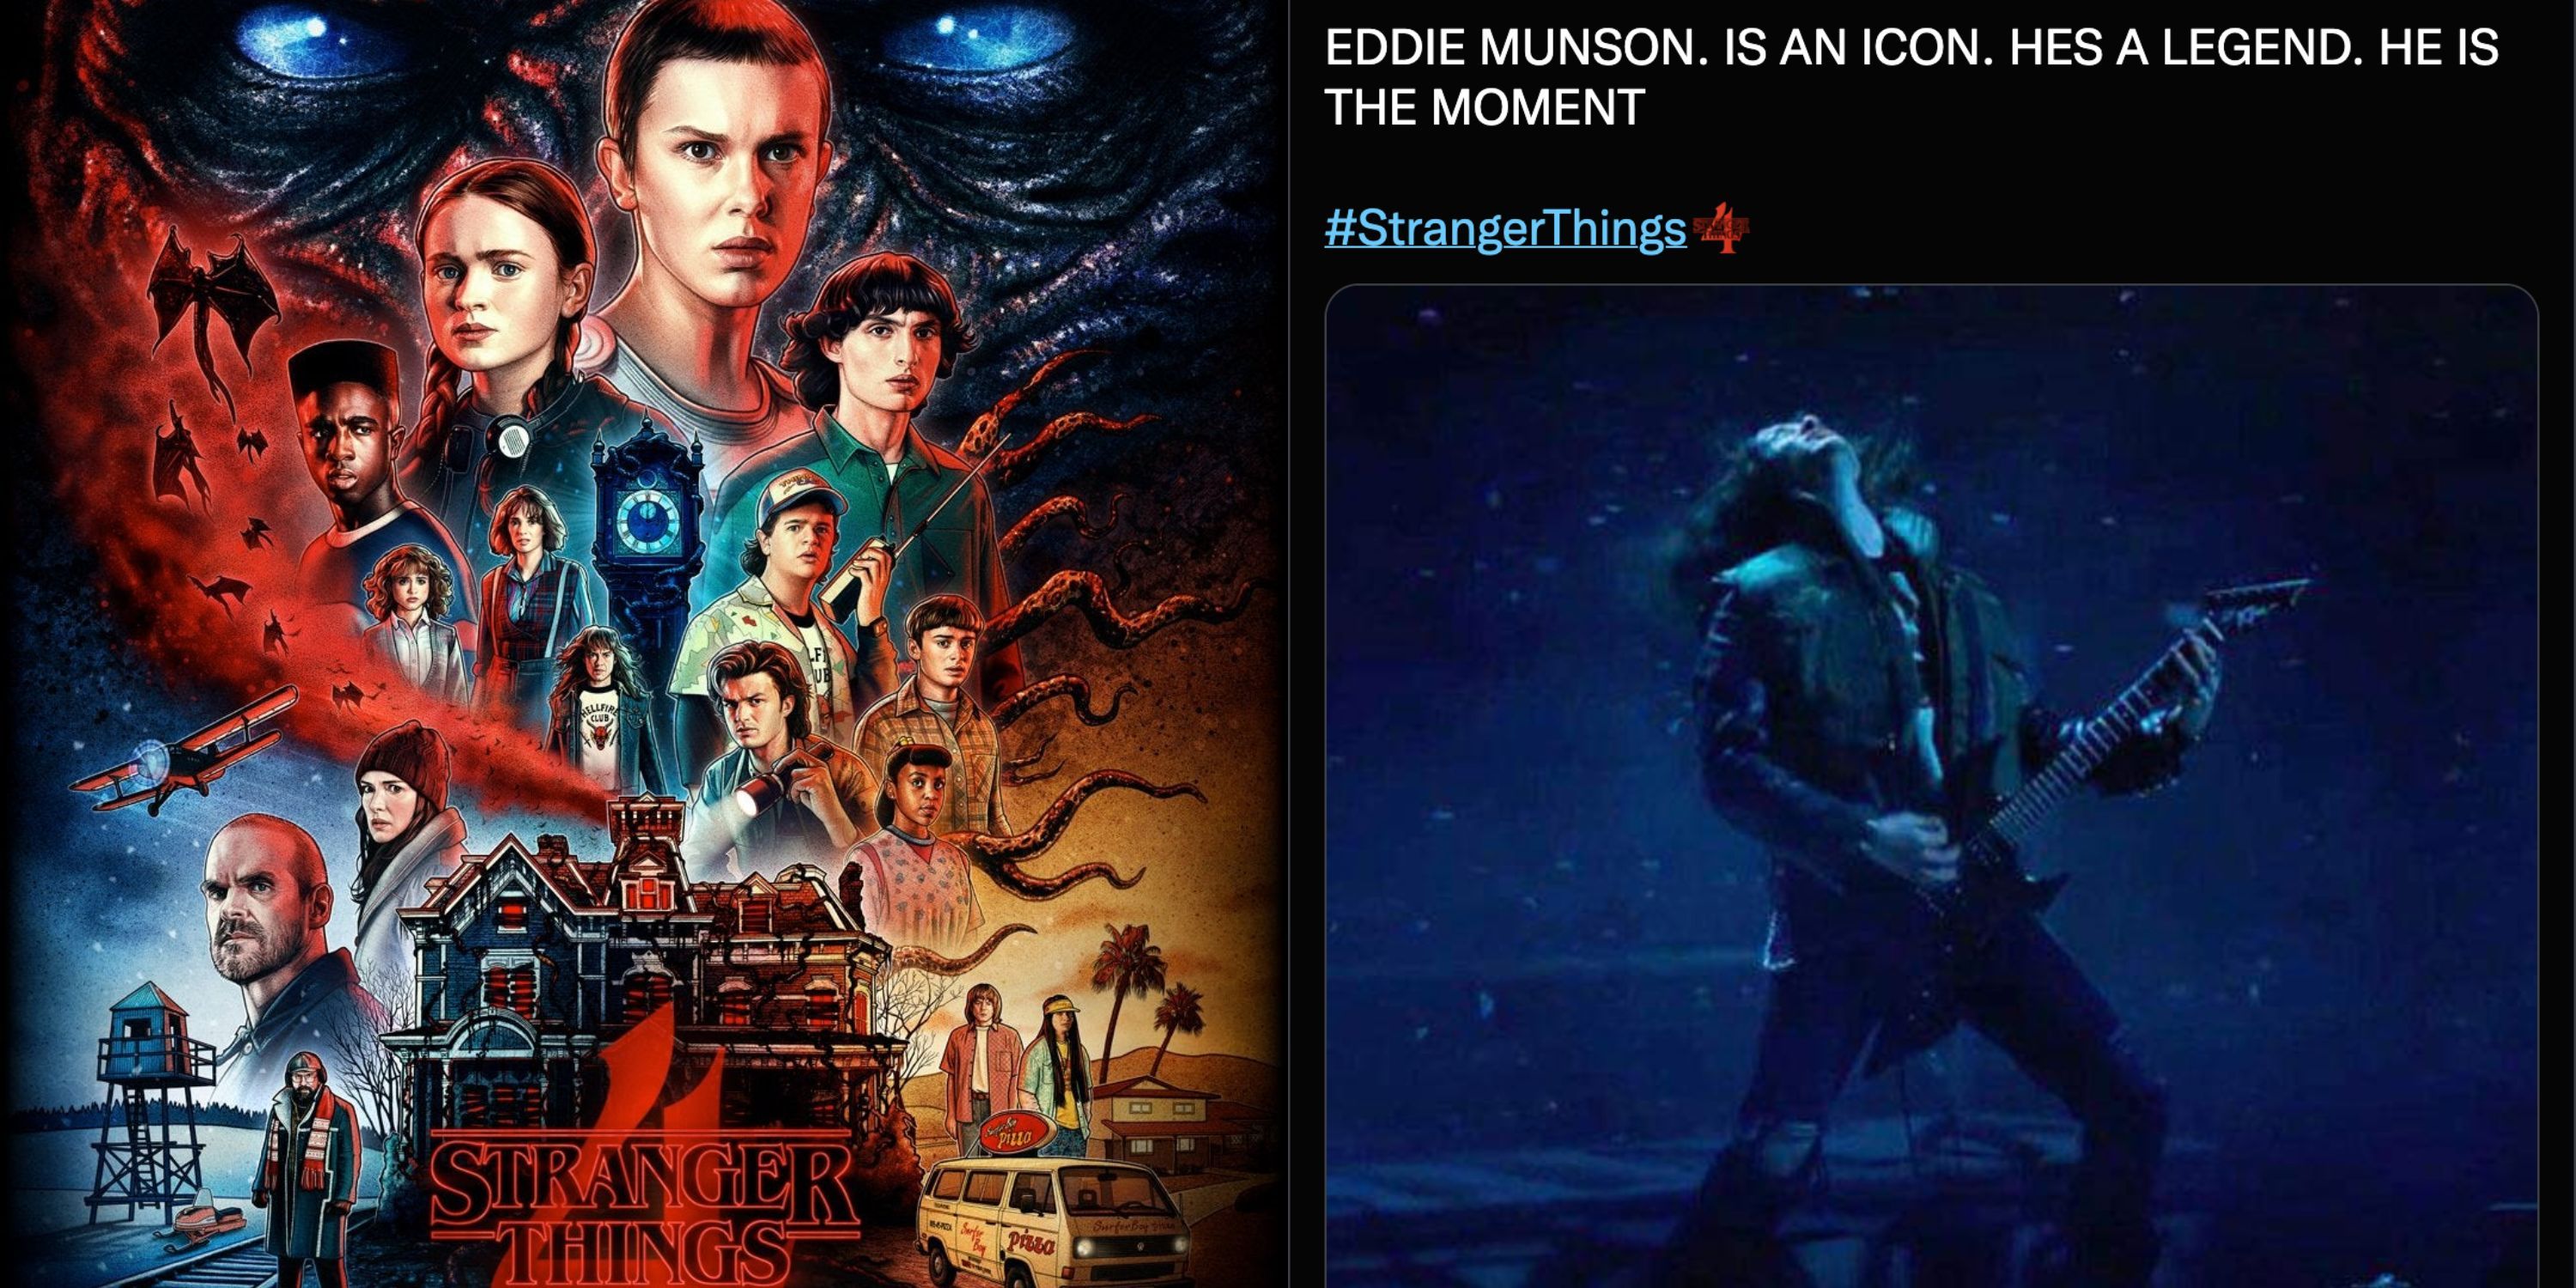 Stranger Things Season 4 Volume 2: Eddie Munson's Performance Of